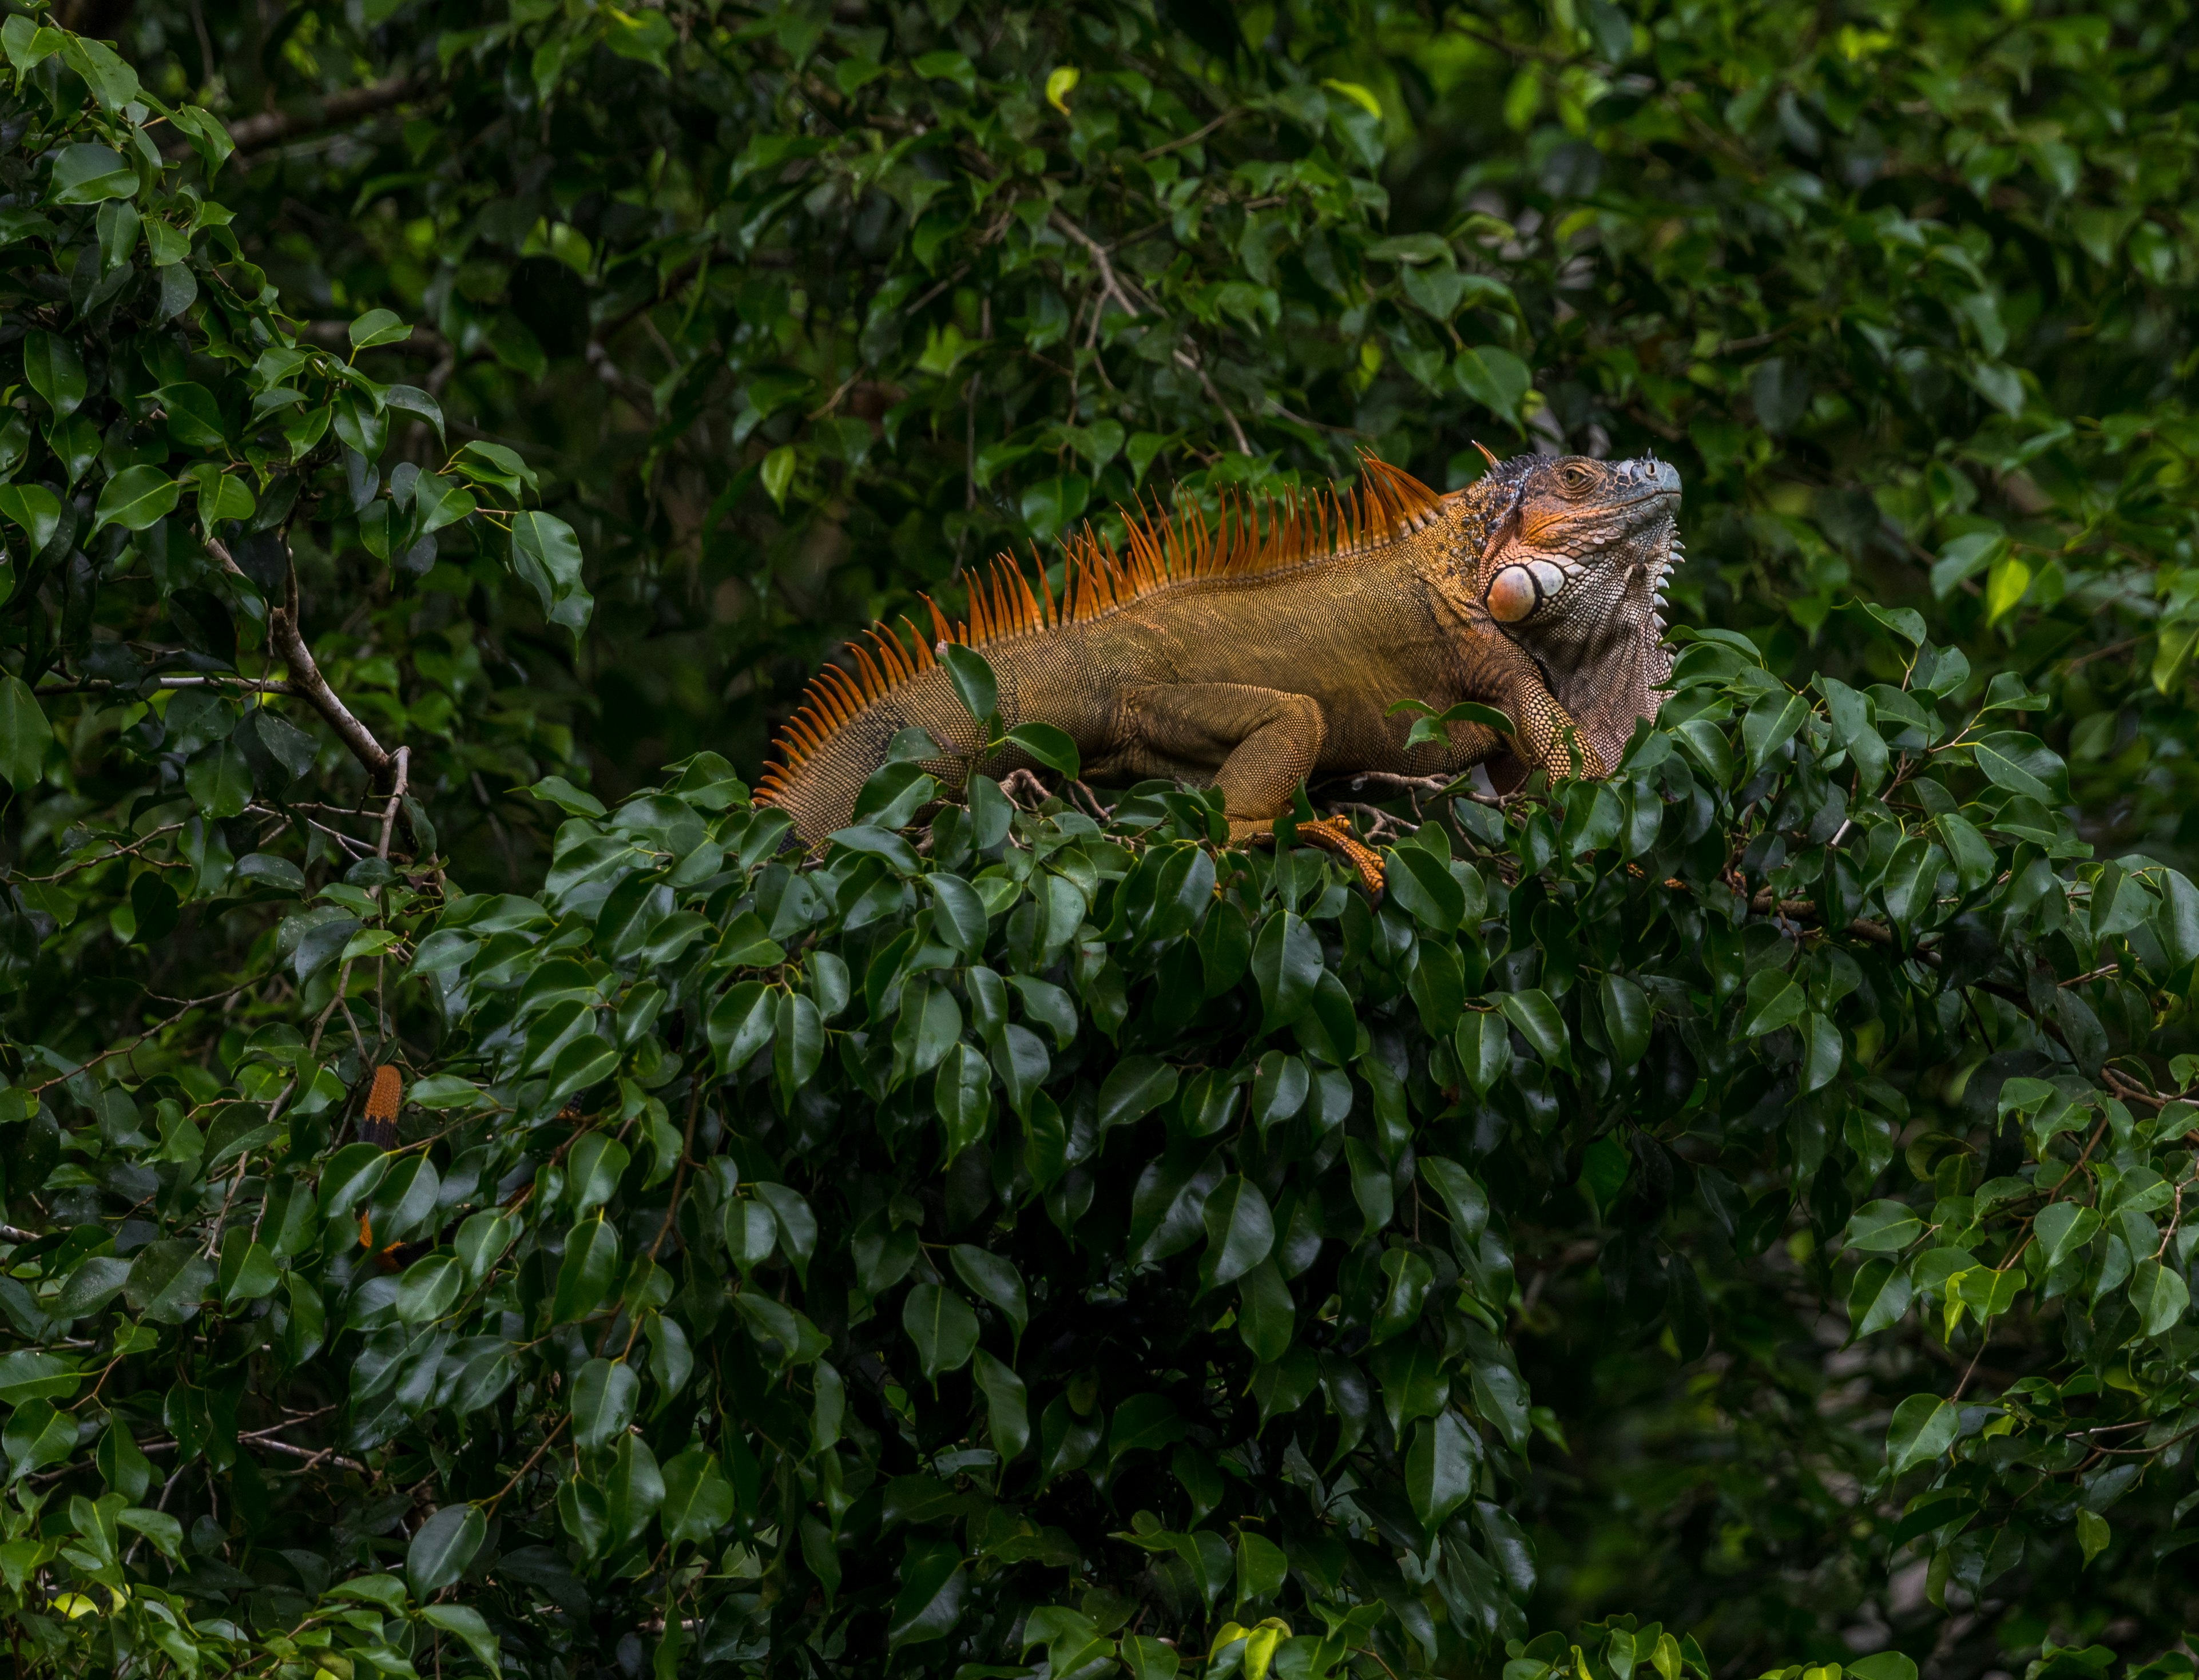 brown iguana on tree